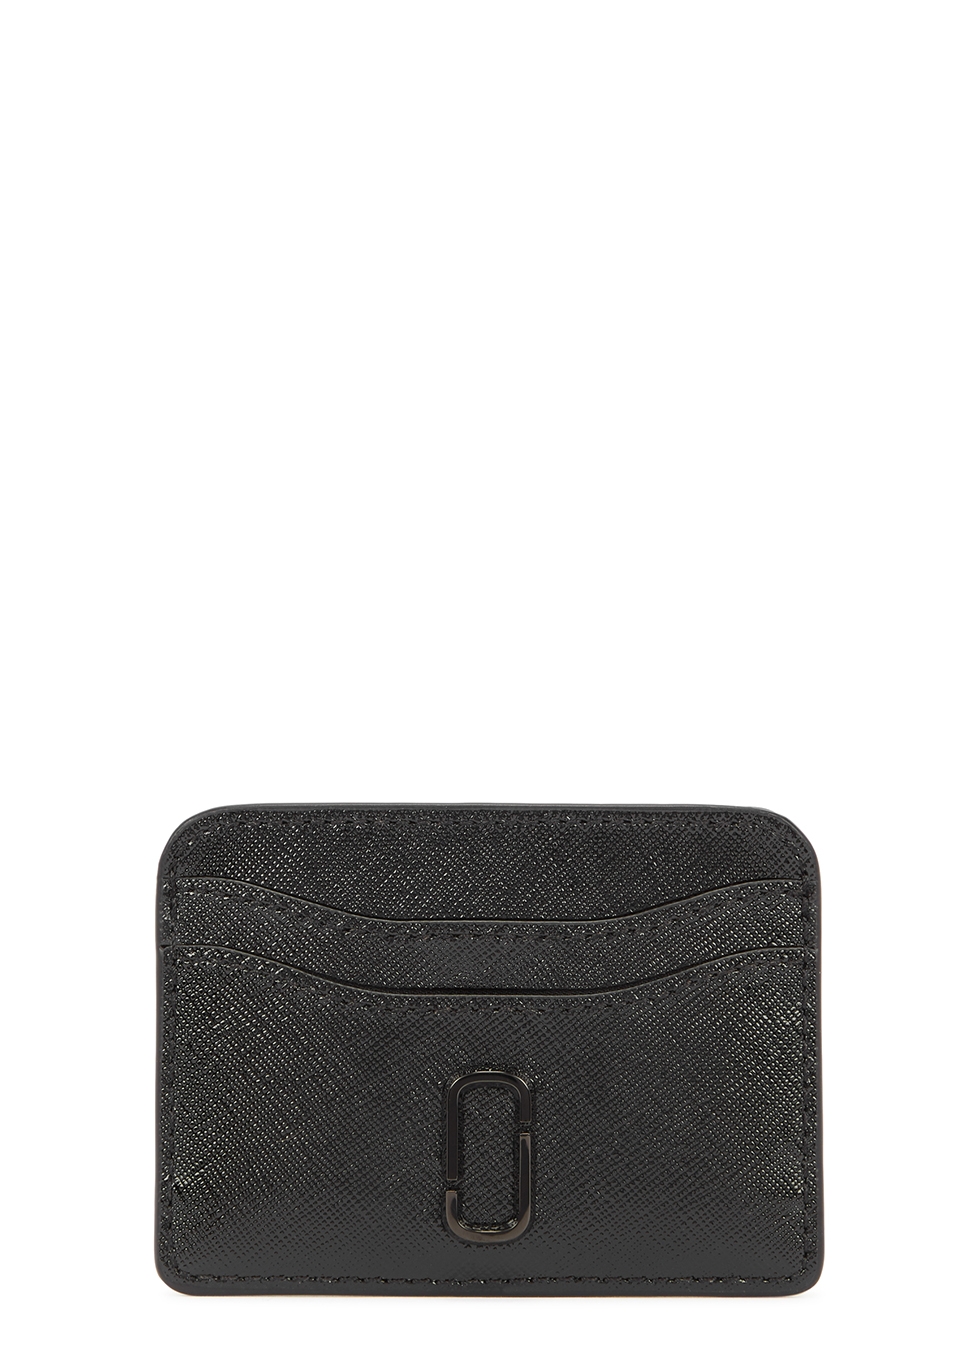 Marc Jacobs The Snapshot DTM black leather card holder